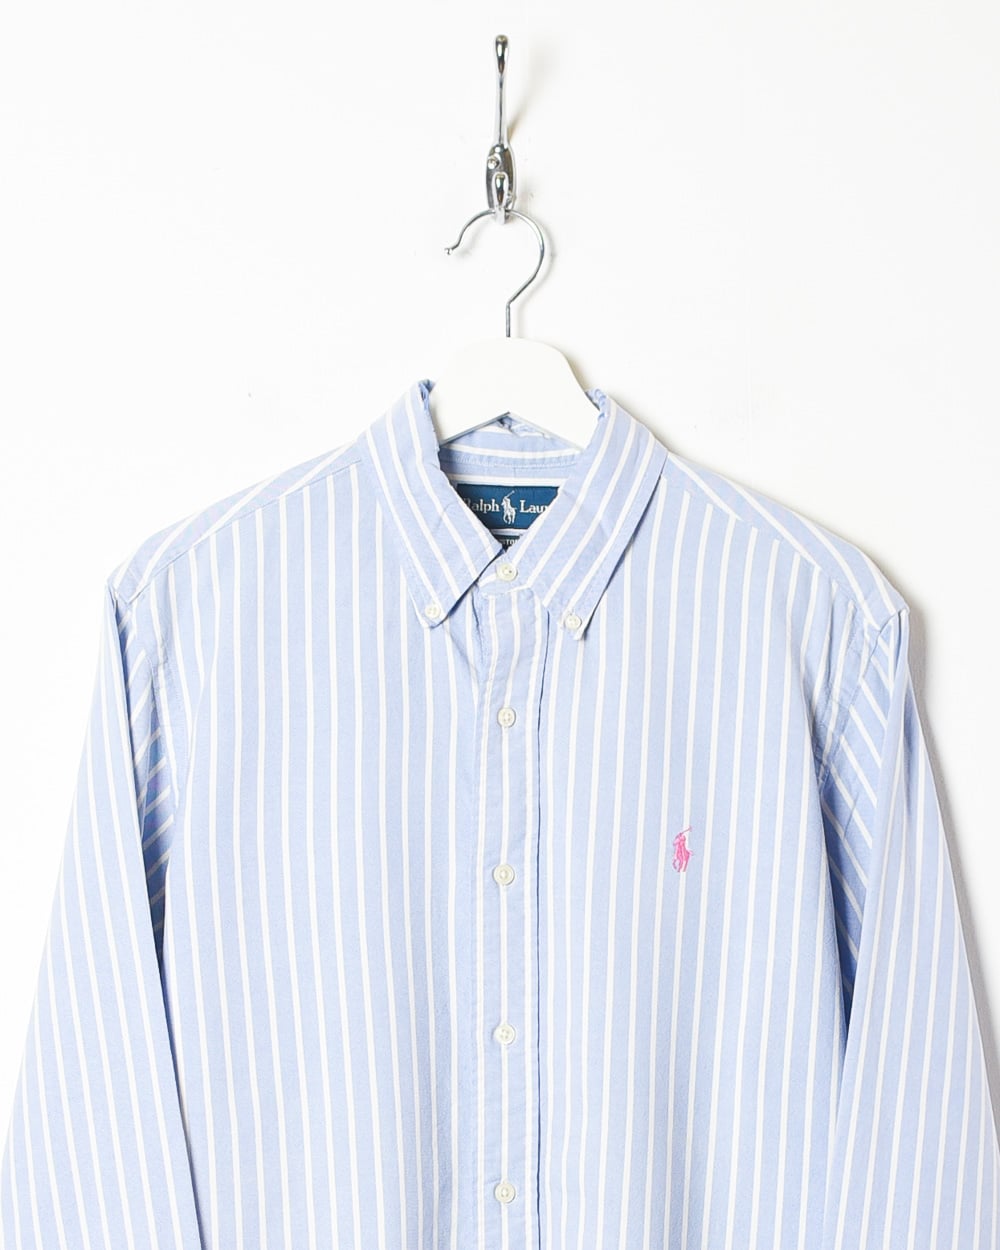 Baby Polo Ralph Lauren Striped Shirt - Medium